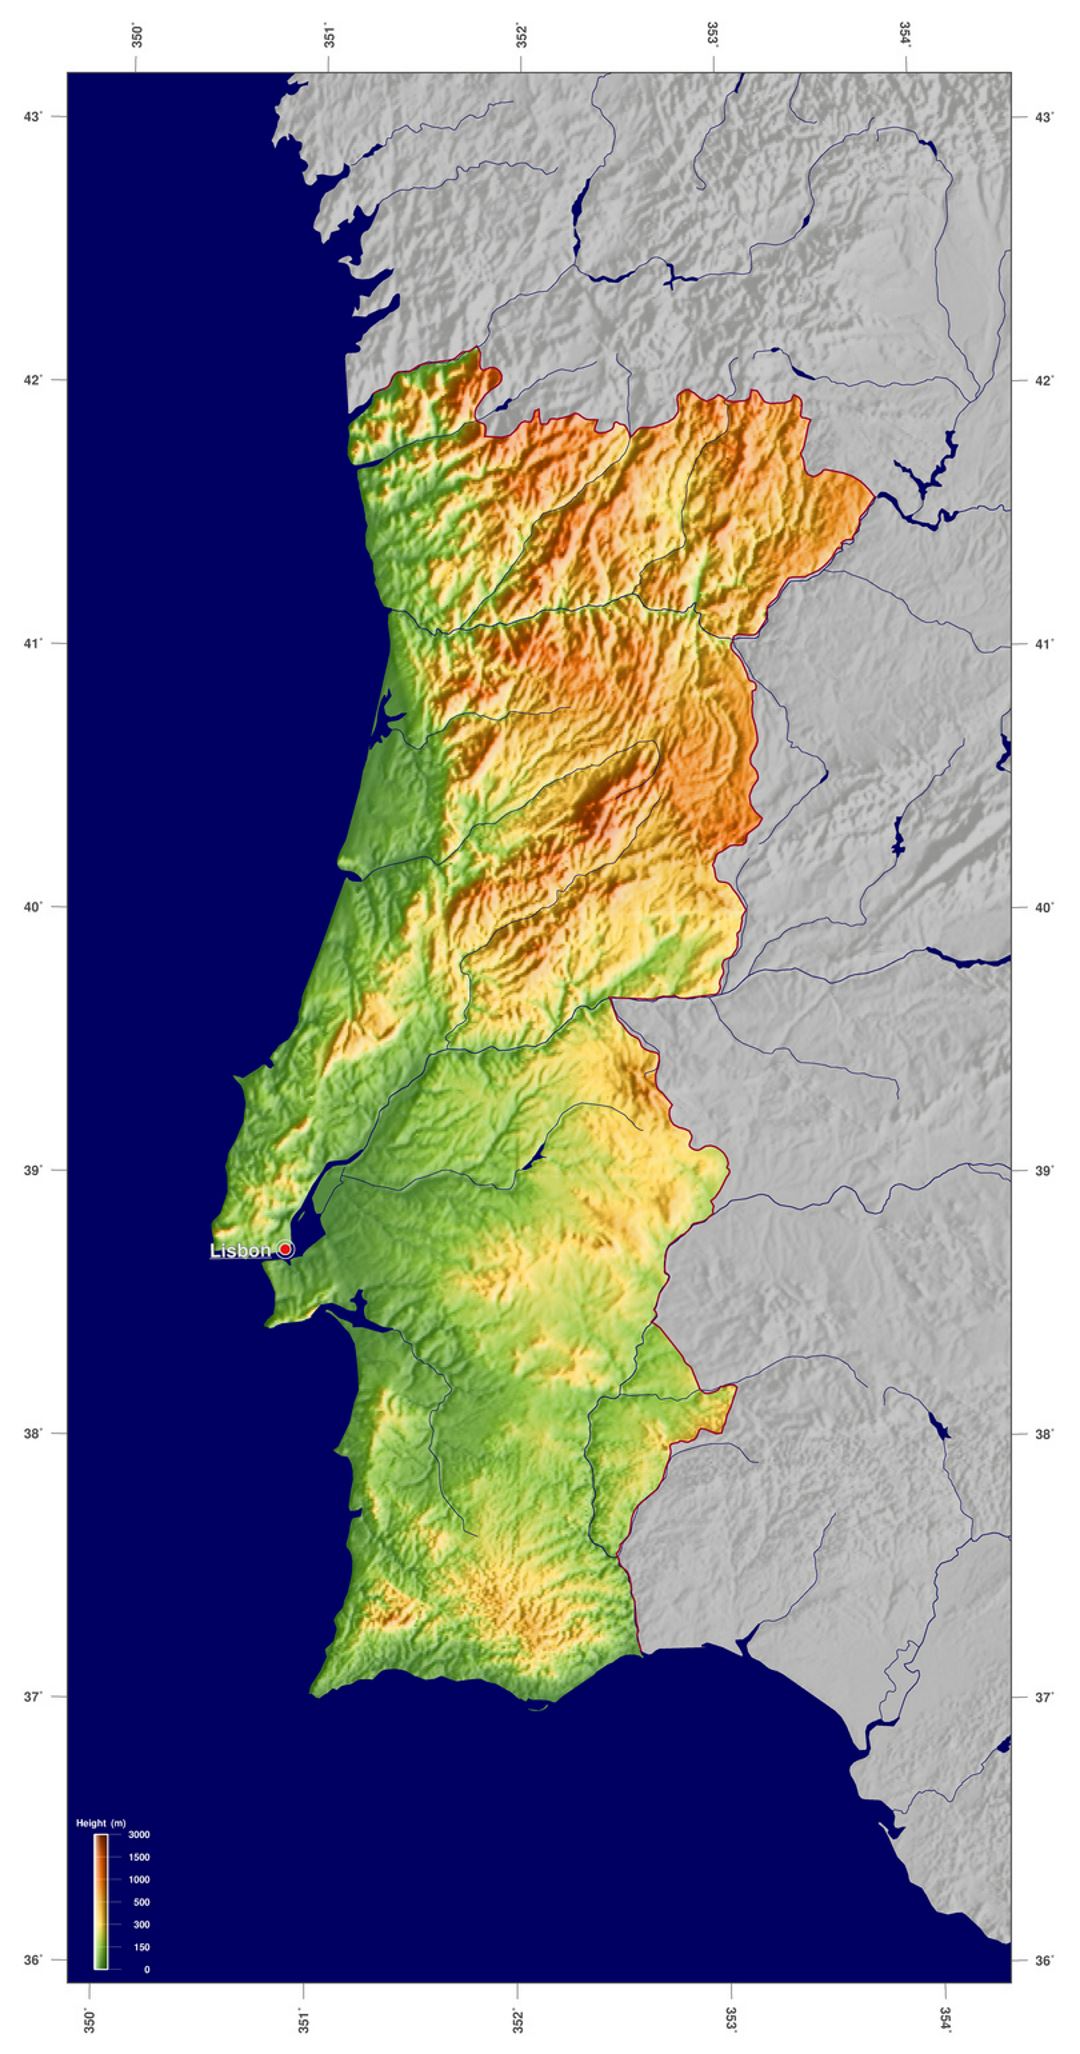 Detallado mapa físico de Portugal